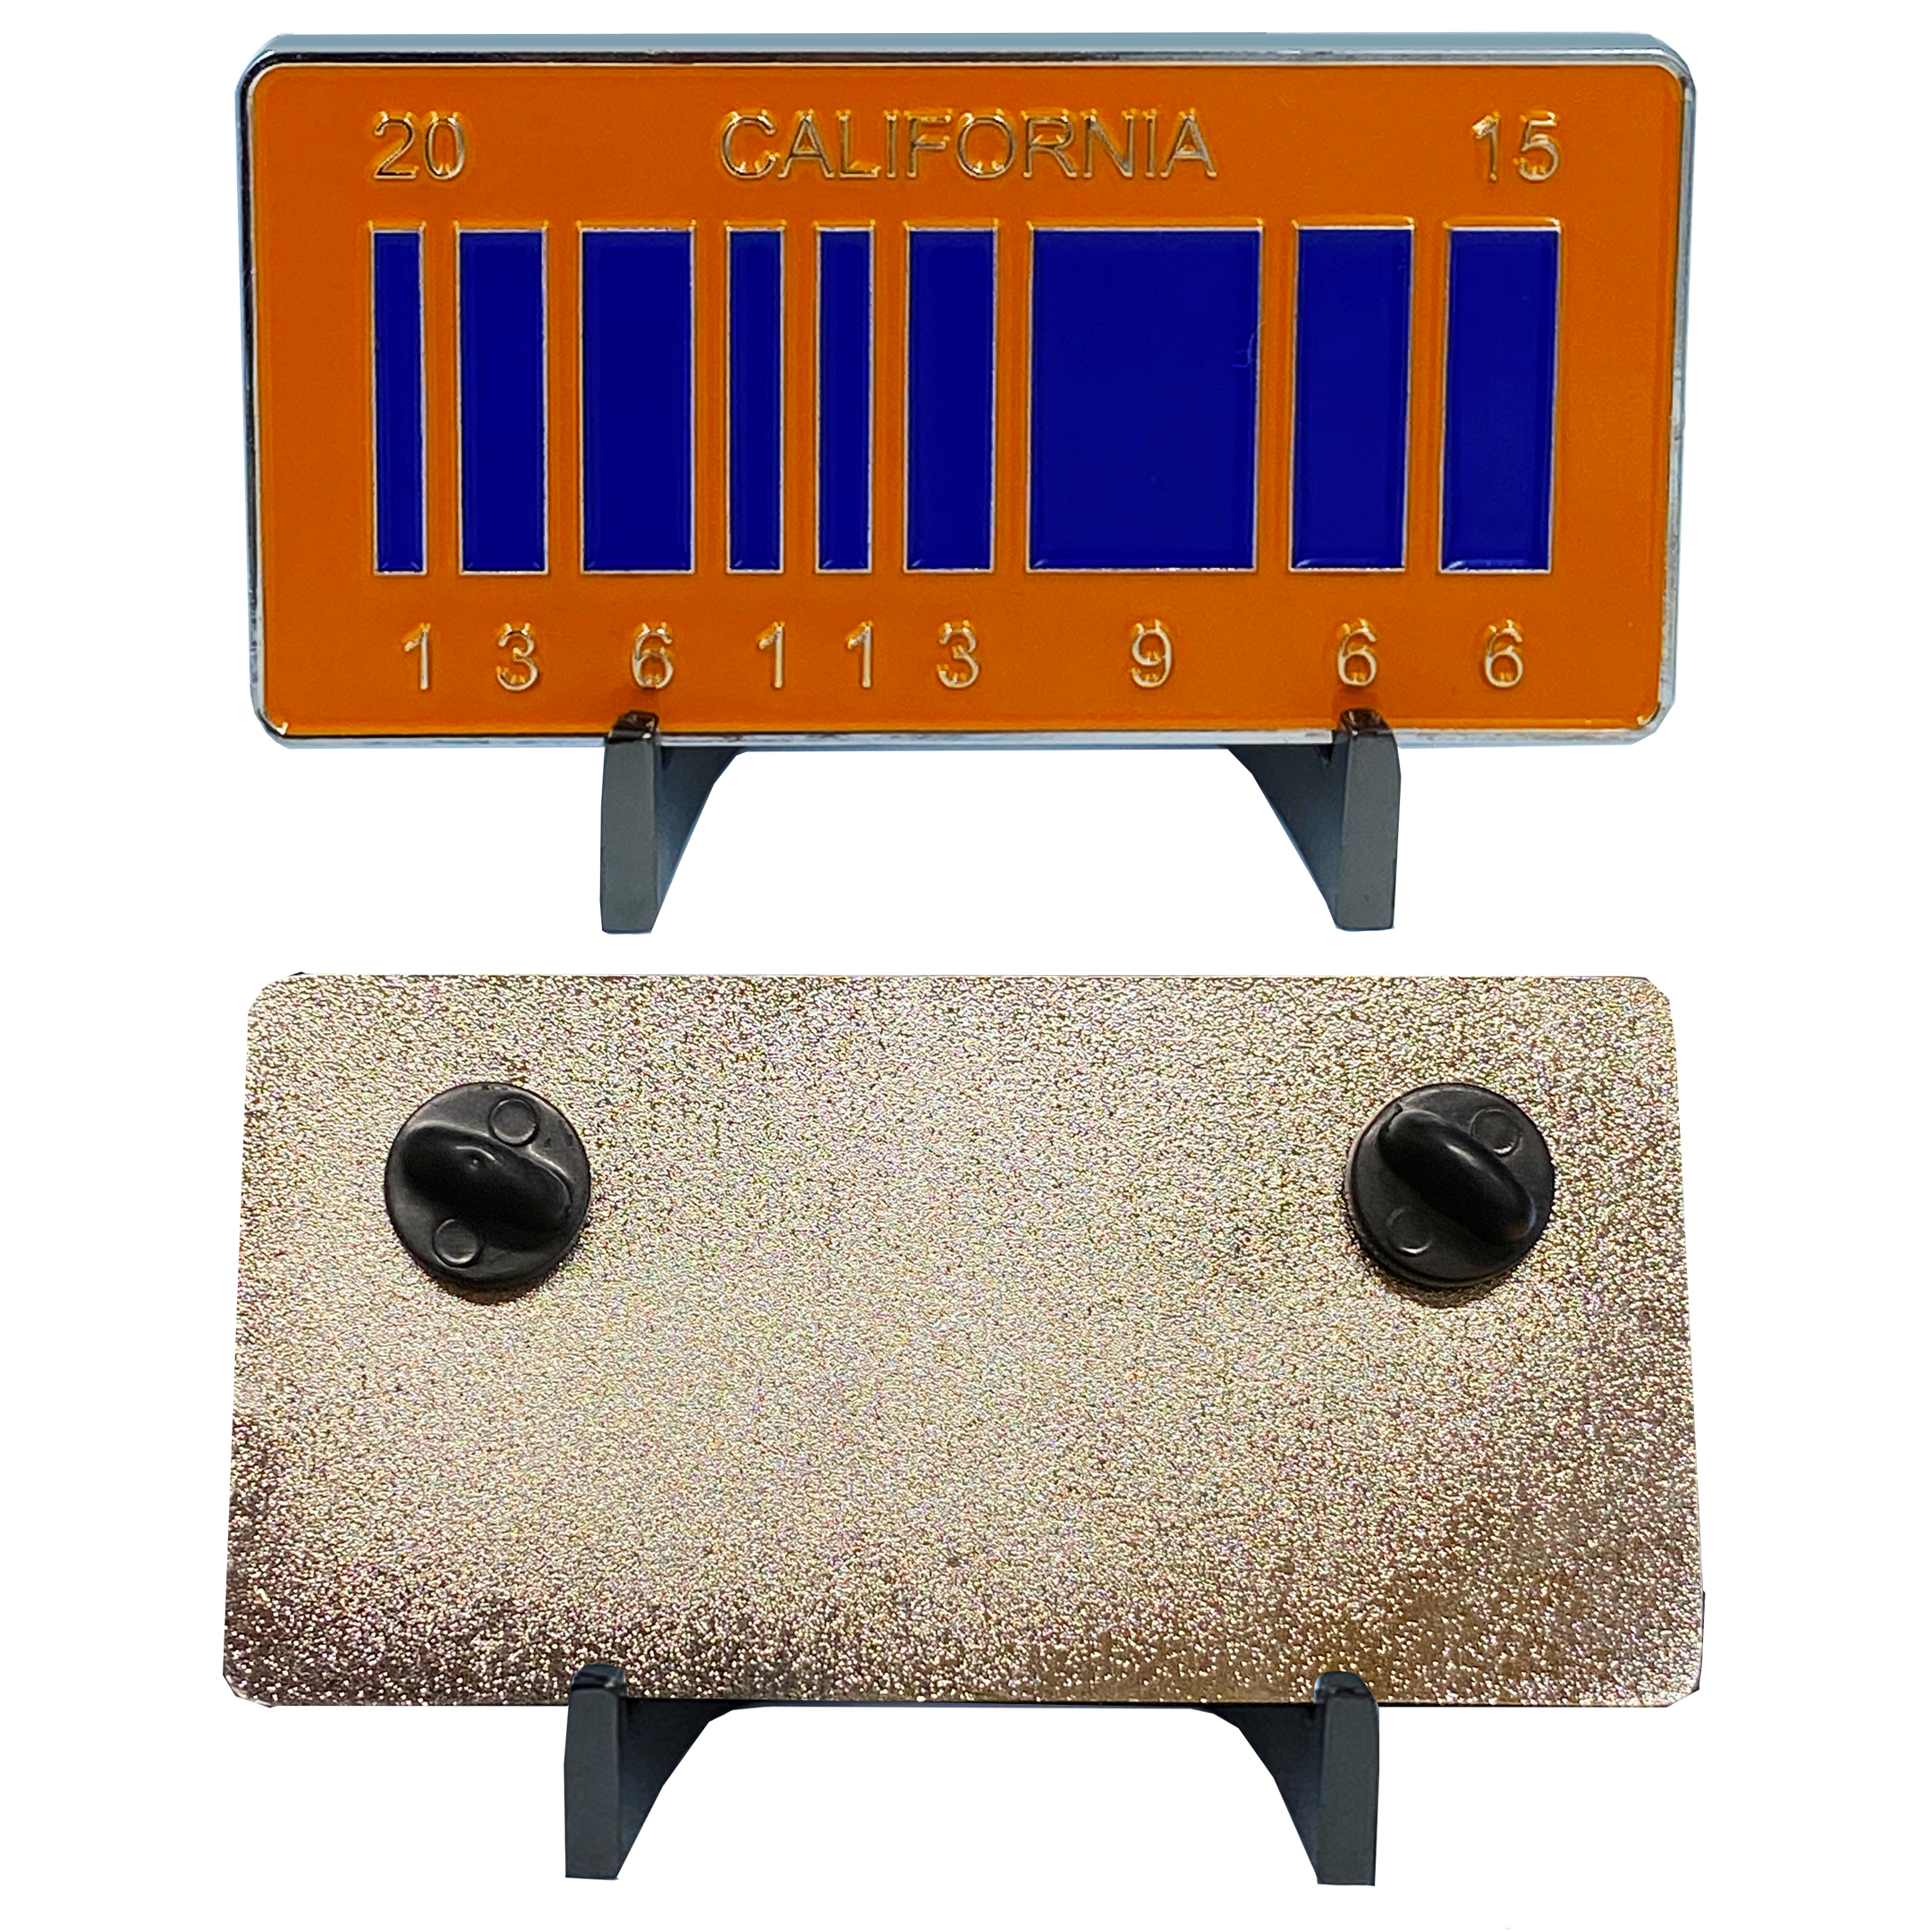 MM-011 Back to the Future inspired 2015 OUTATIME Delorean California License Plate Pin